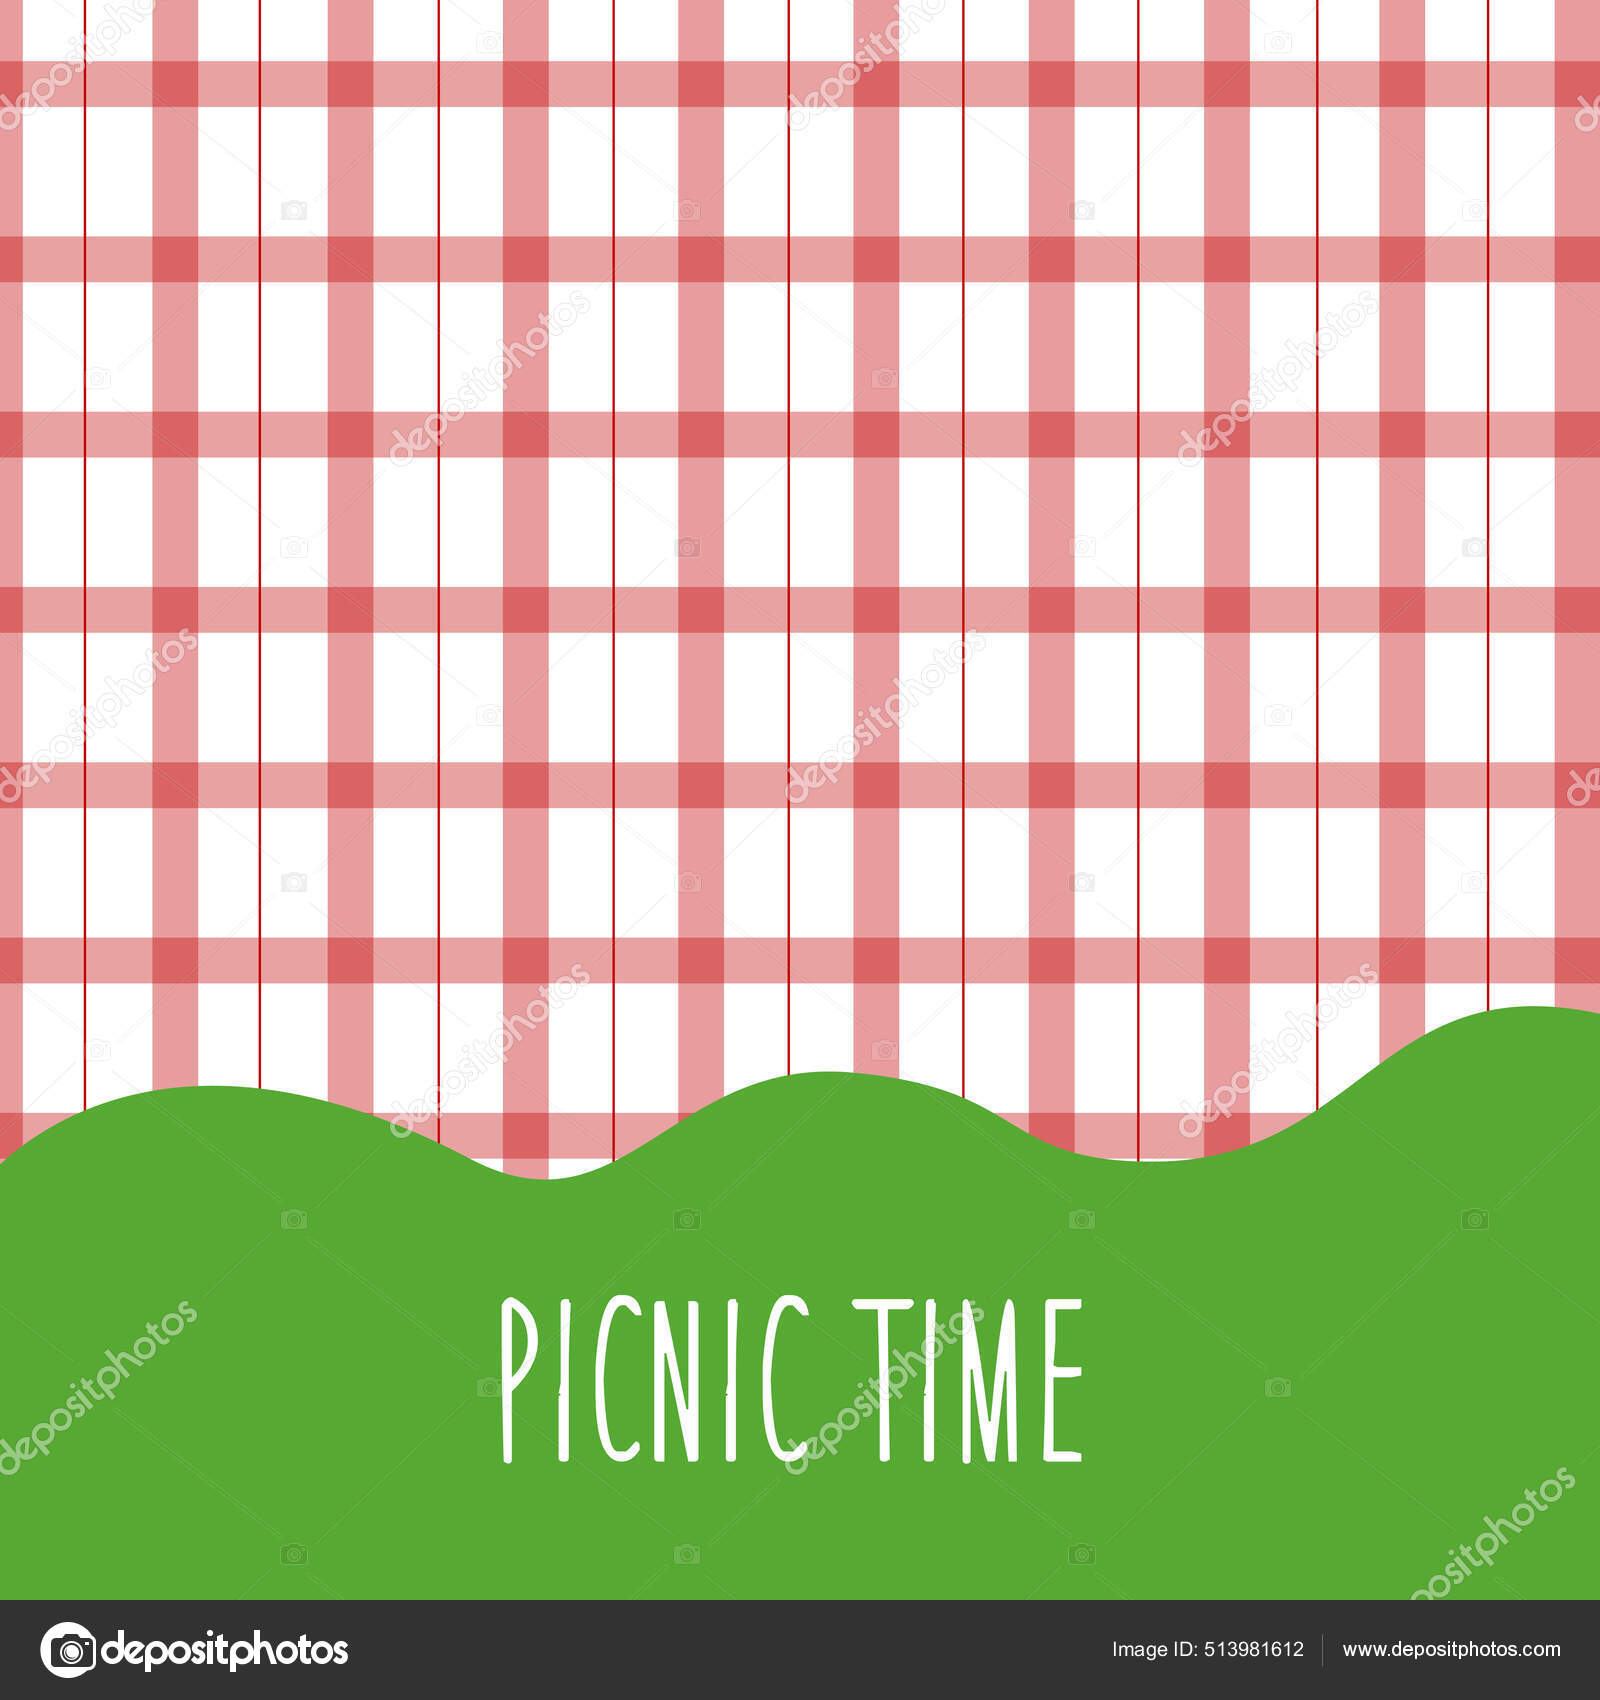 Picnic Time Vector Illustration Background Banner Flyer Stock Vector Image  by ©VBrand #513981612